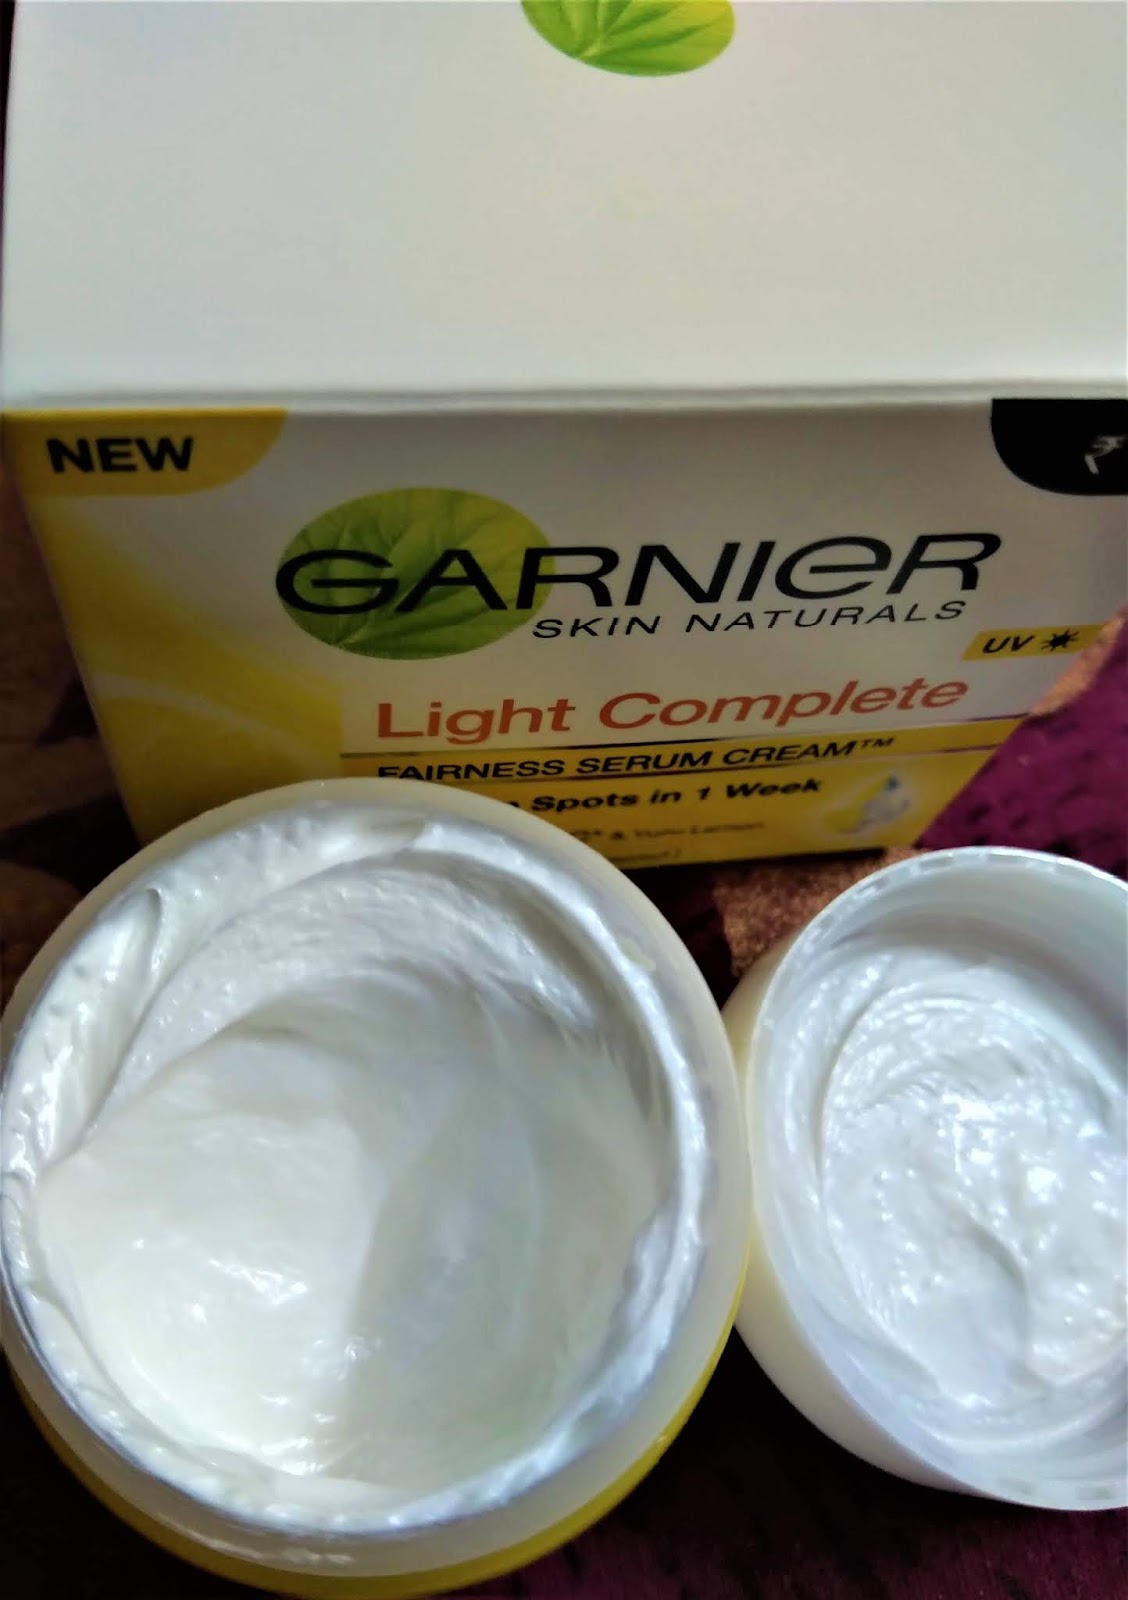 A Beautiful Life Garnier Light Complete Fairness Serum Cream Review Spots Lightening Product With Vitamin C Beauty Review